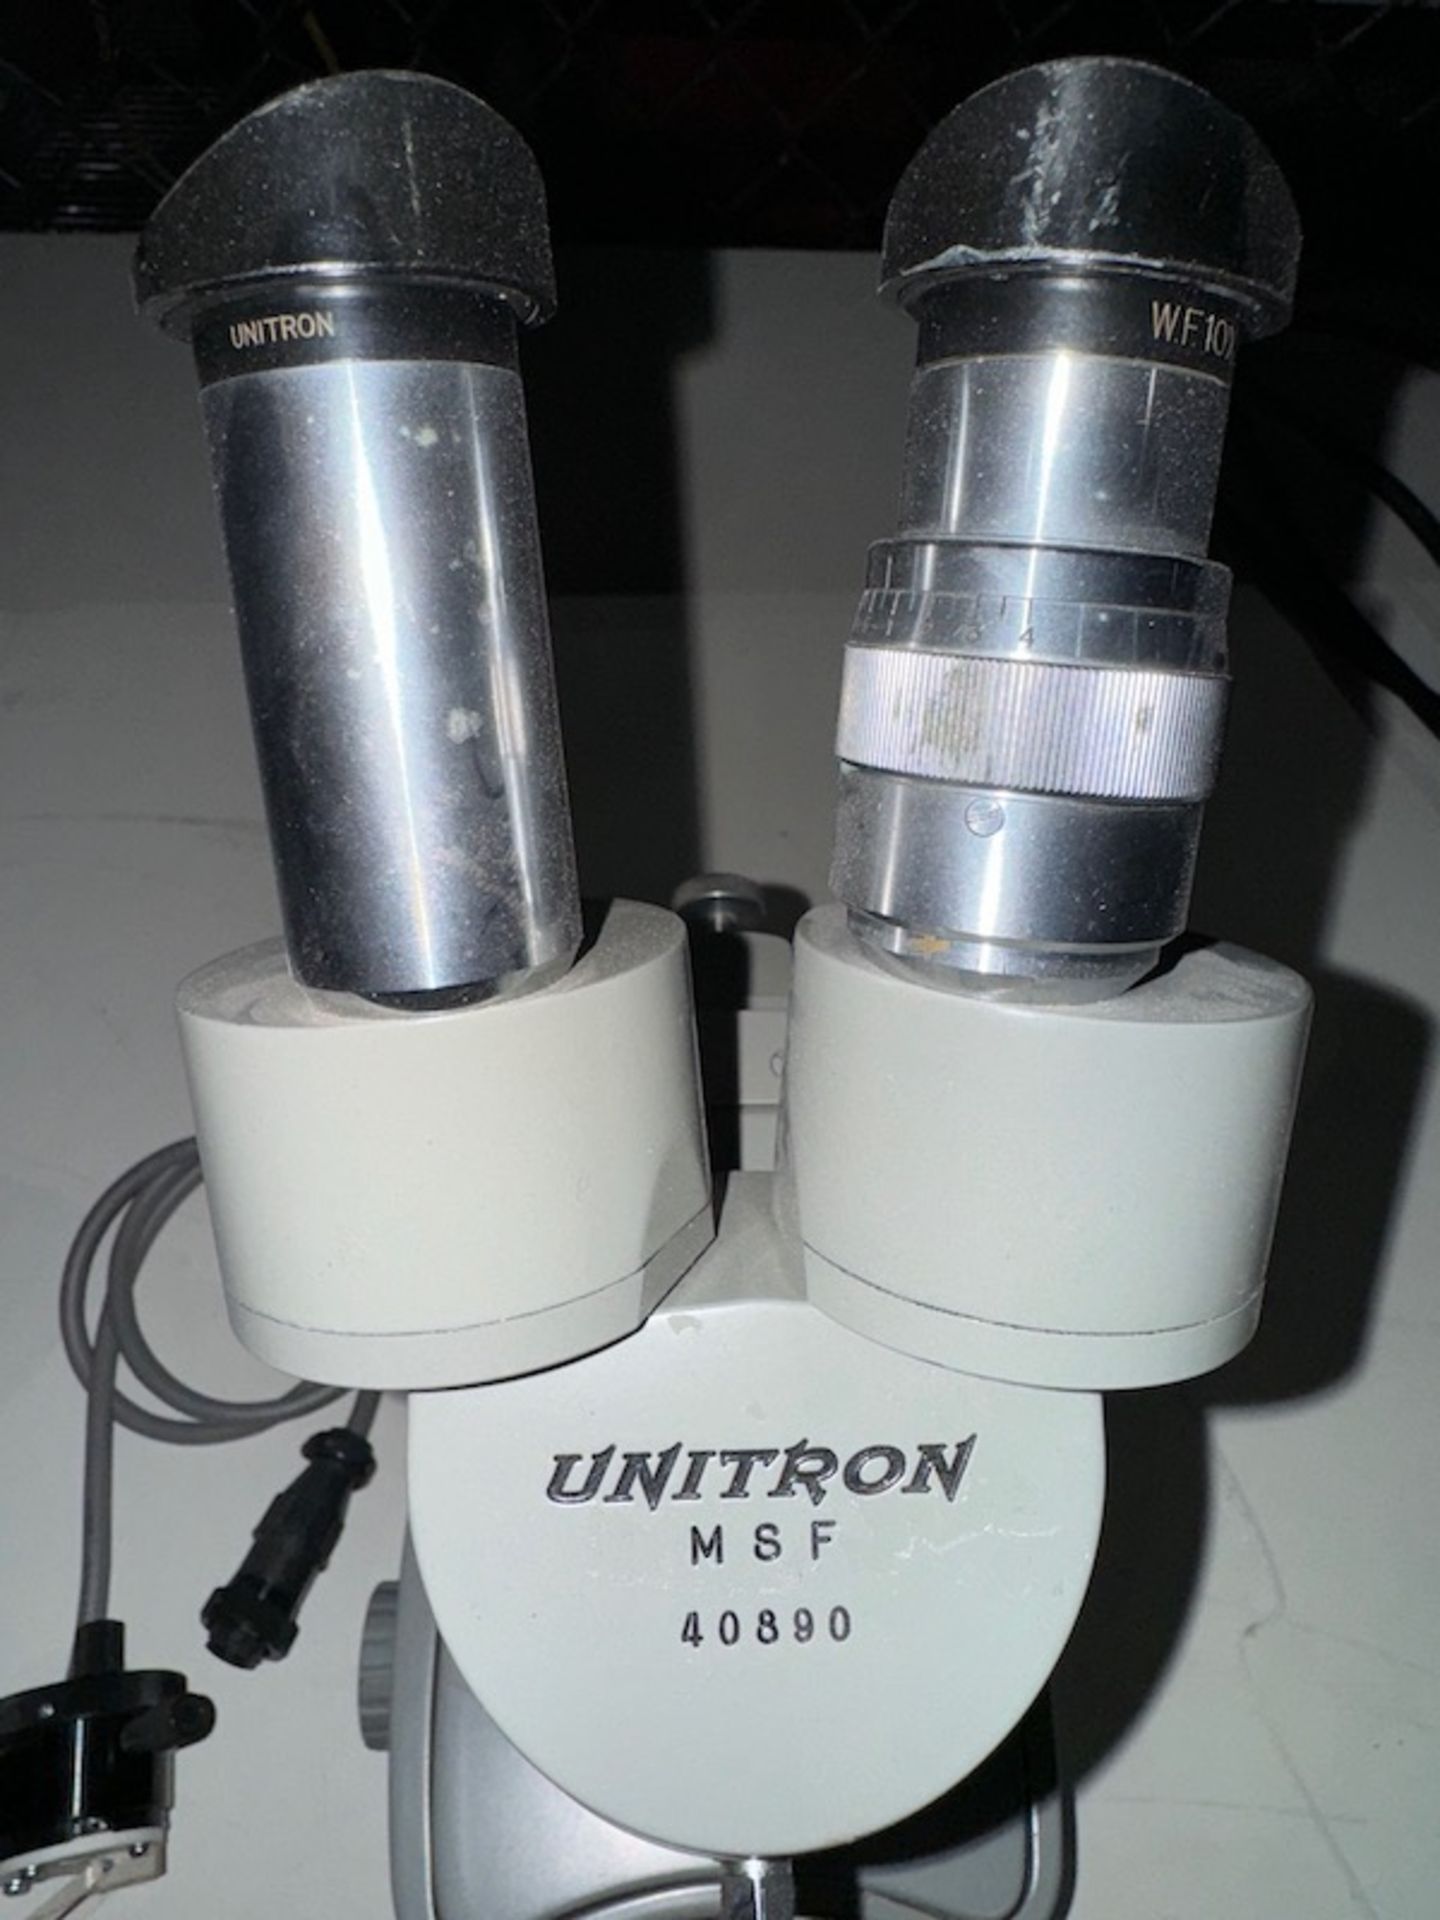 UNITRON M S F 40890 MACHINISTS MICROSCOPE - Image 11 of 16